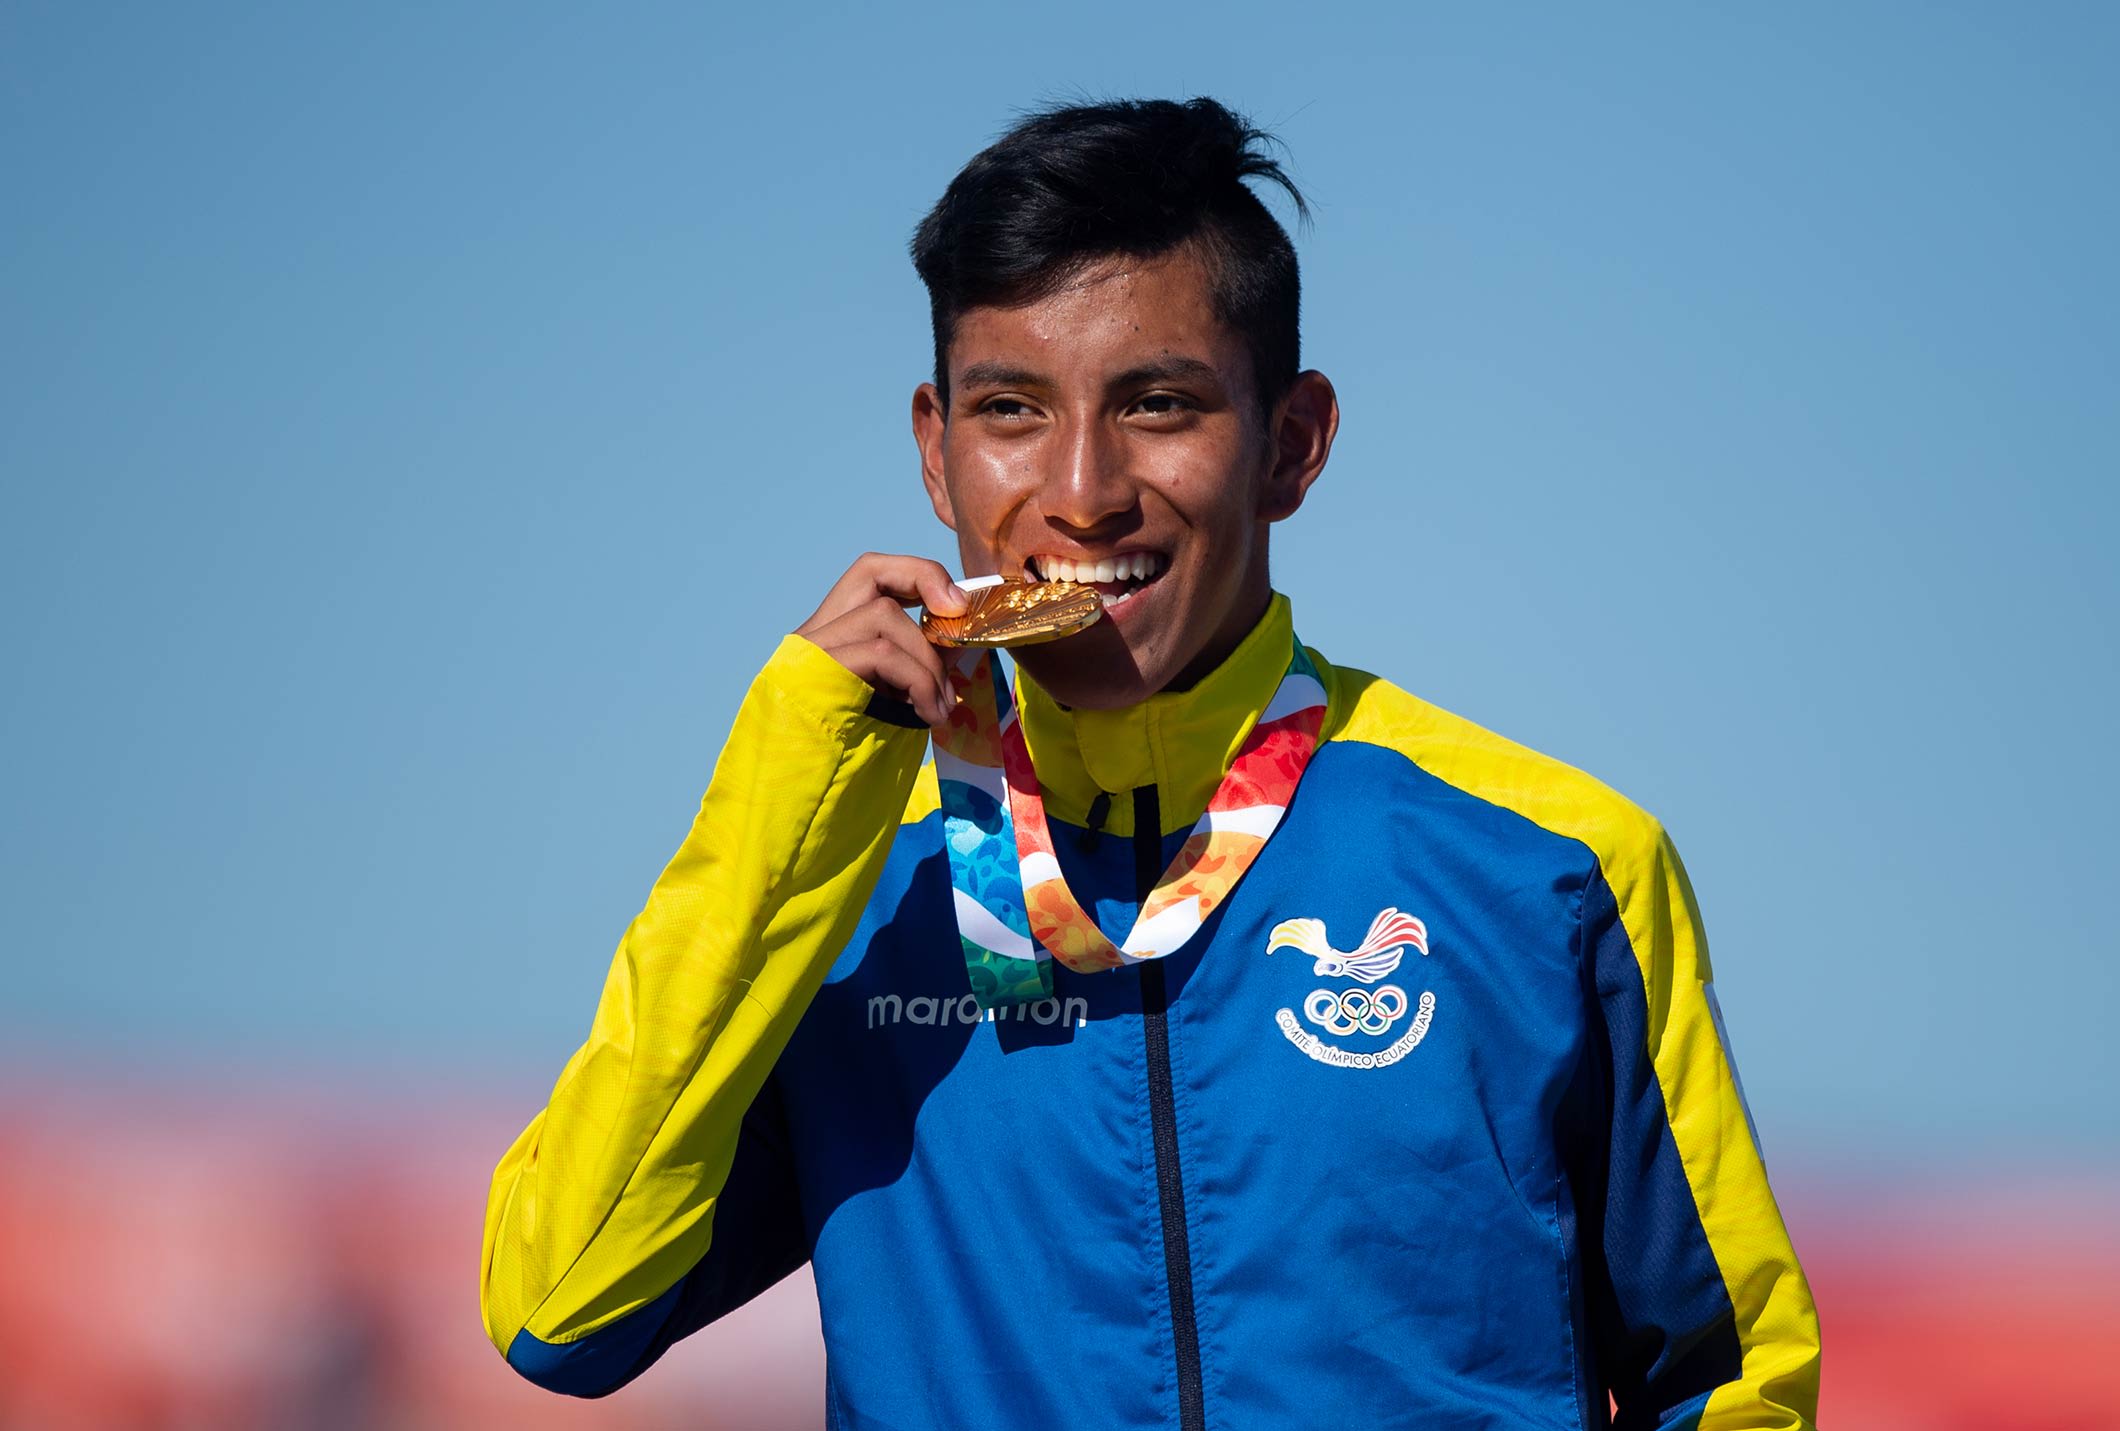 The Ecuadorian racewalker Oscar Patin won the gold medal in the men's 5000m racewalk. (IOC/IOS)